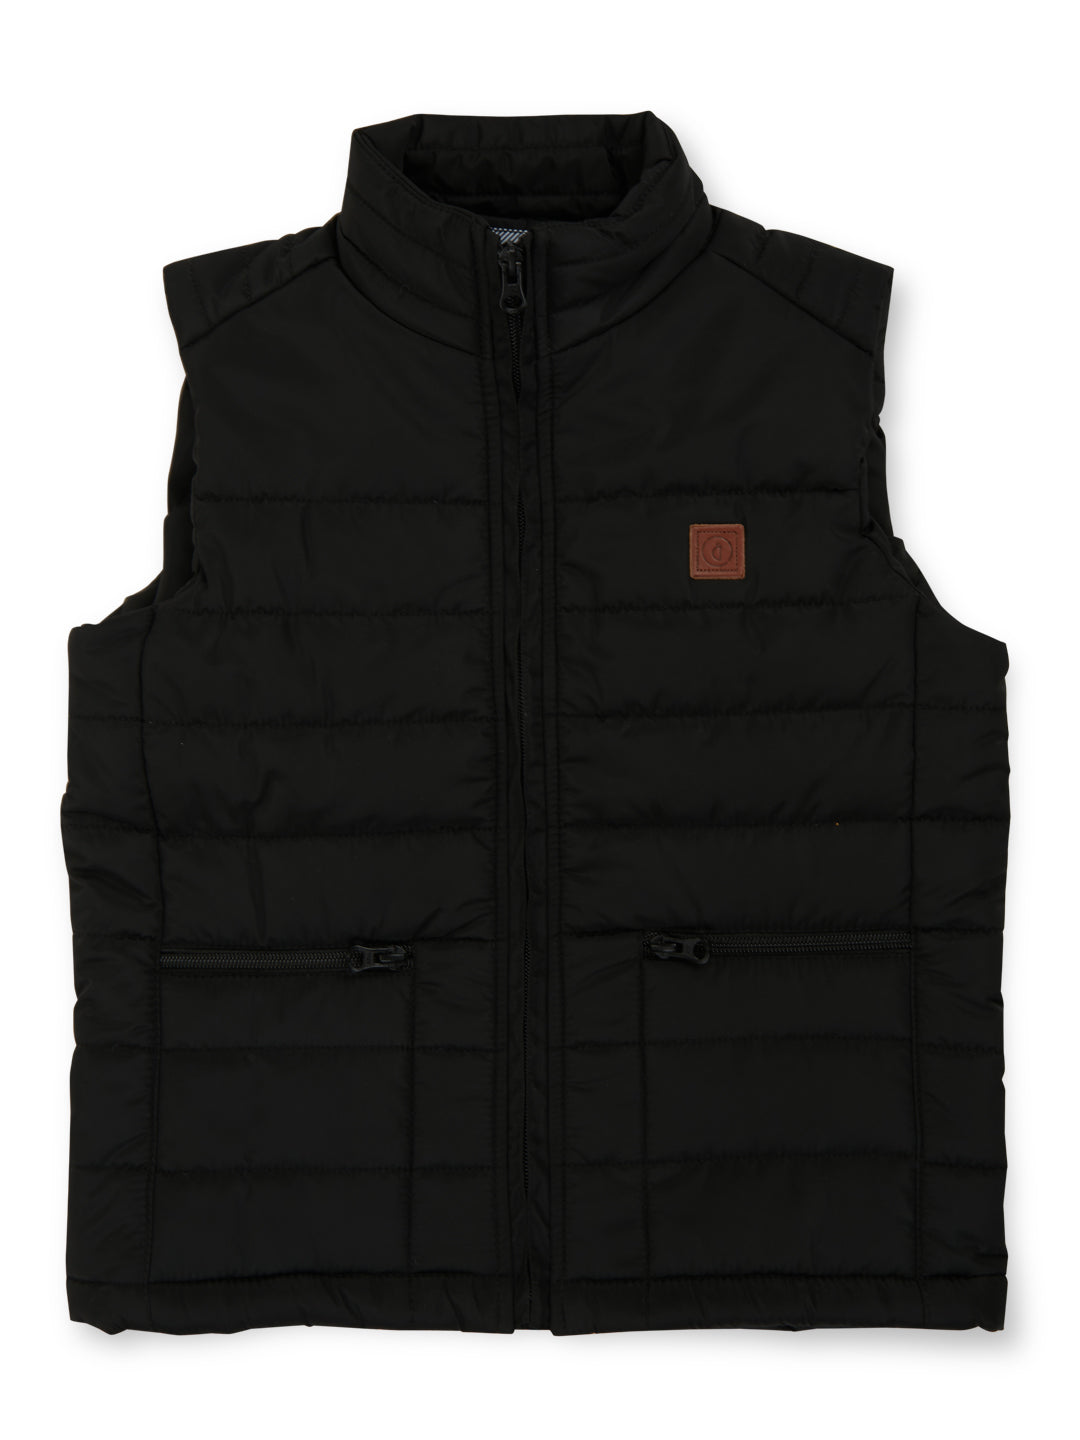 Boys Black Solid Polyester Heavy Winter Jacket